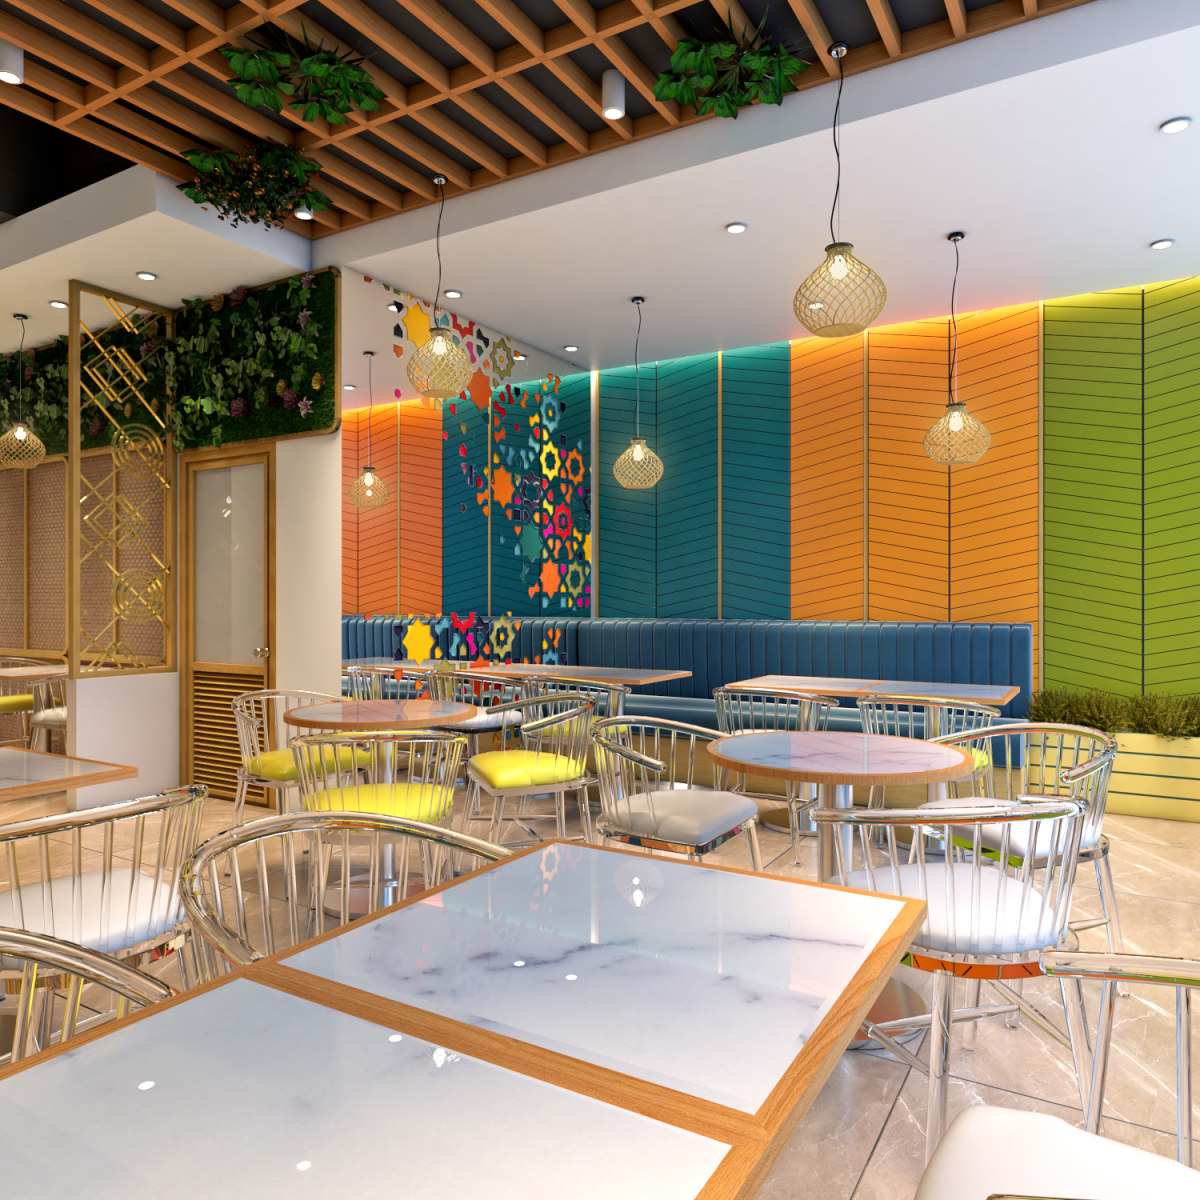 Interior Design Project 2: Restaurant Design on Behance